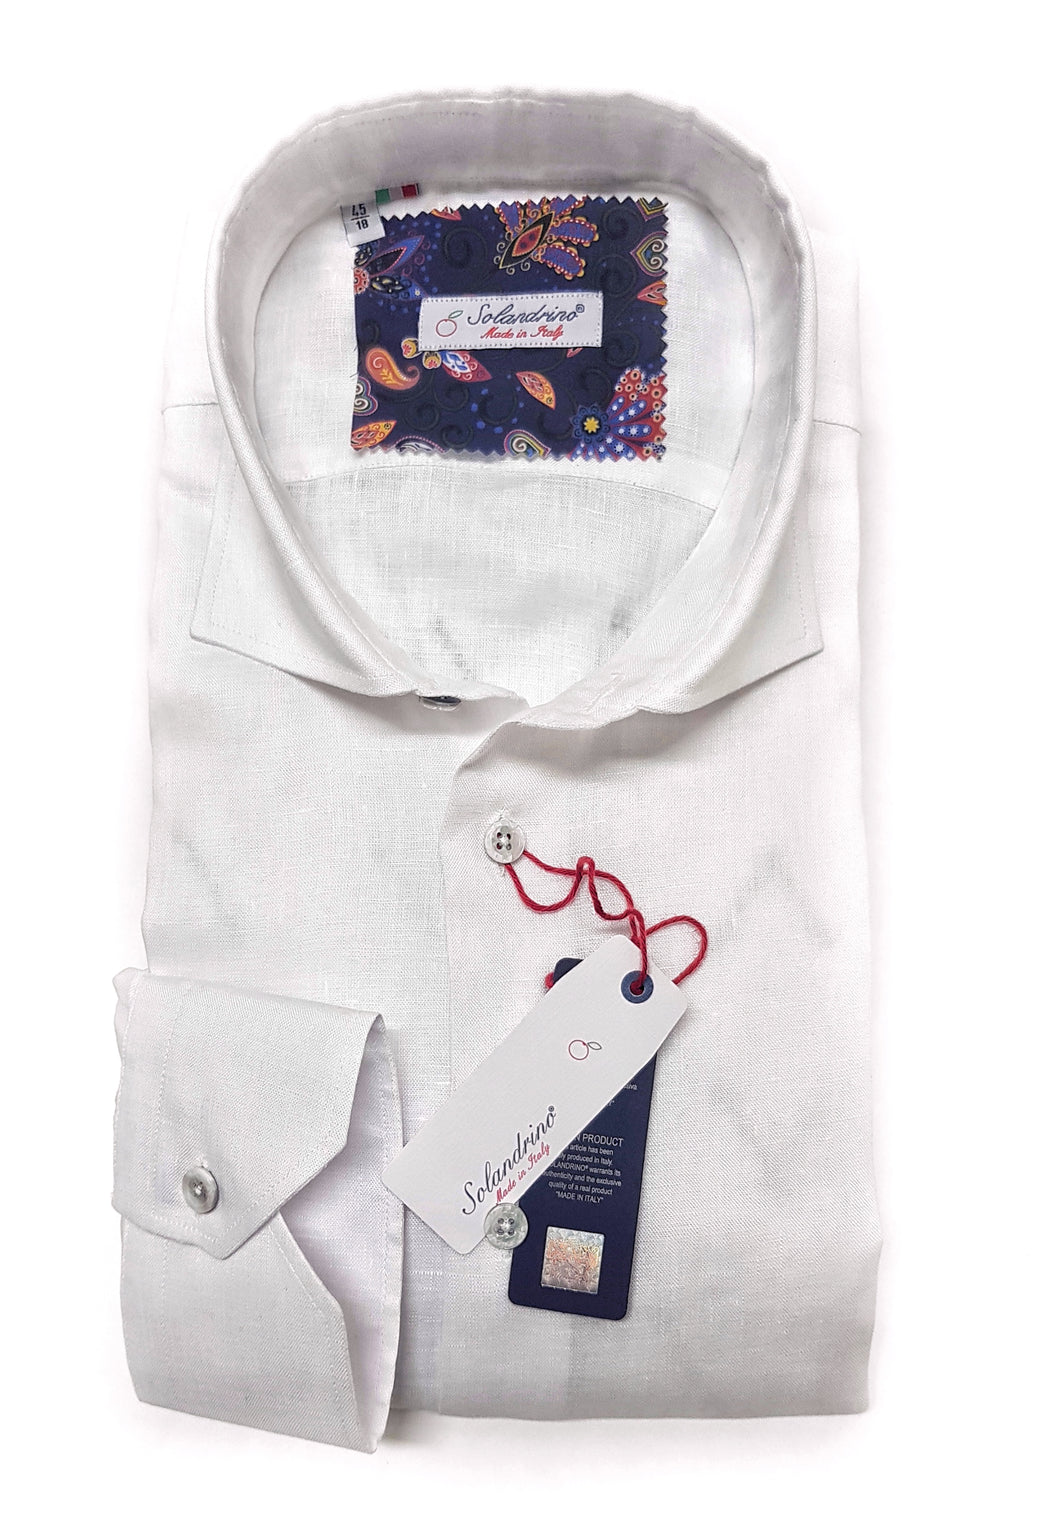 Camicia Bianca puro Lino made in Italy - white Linen Shirt